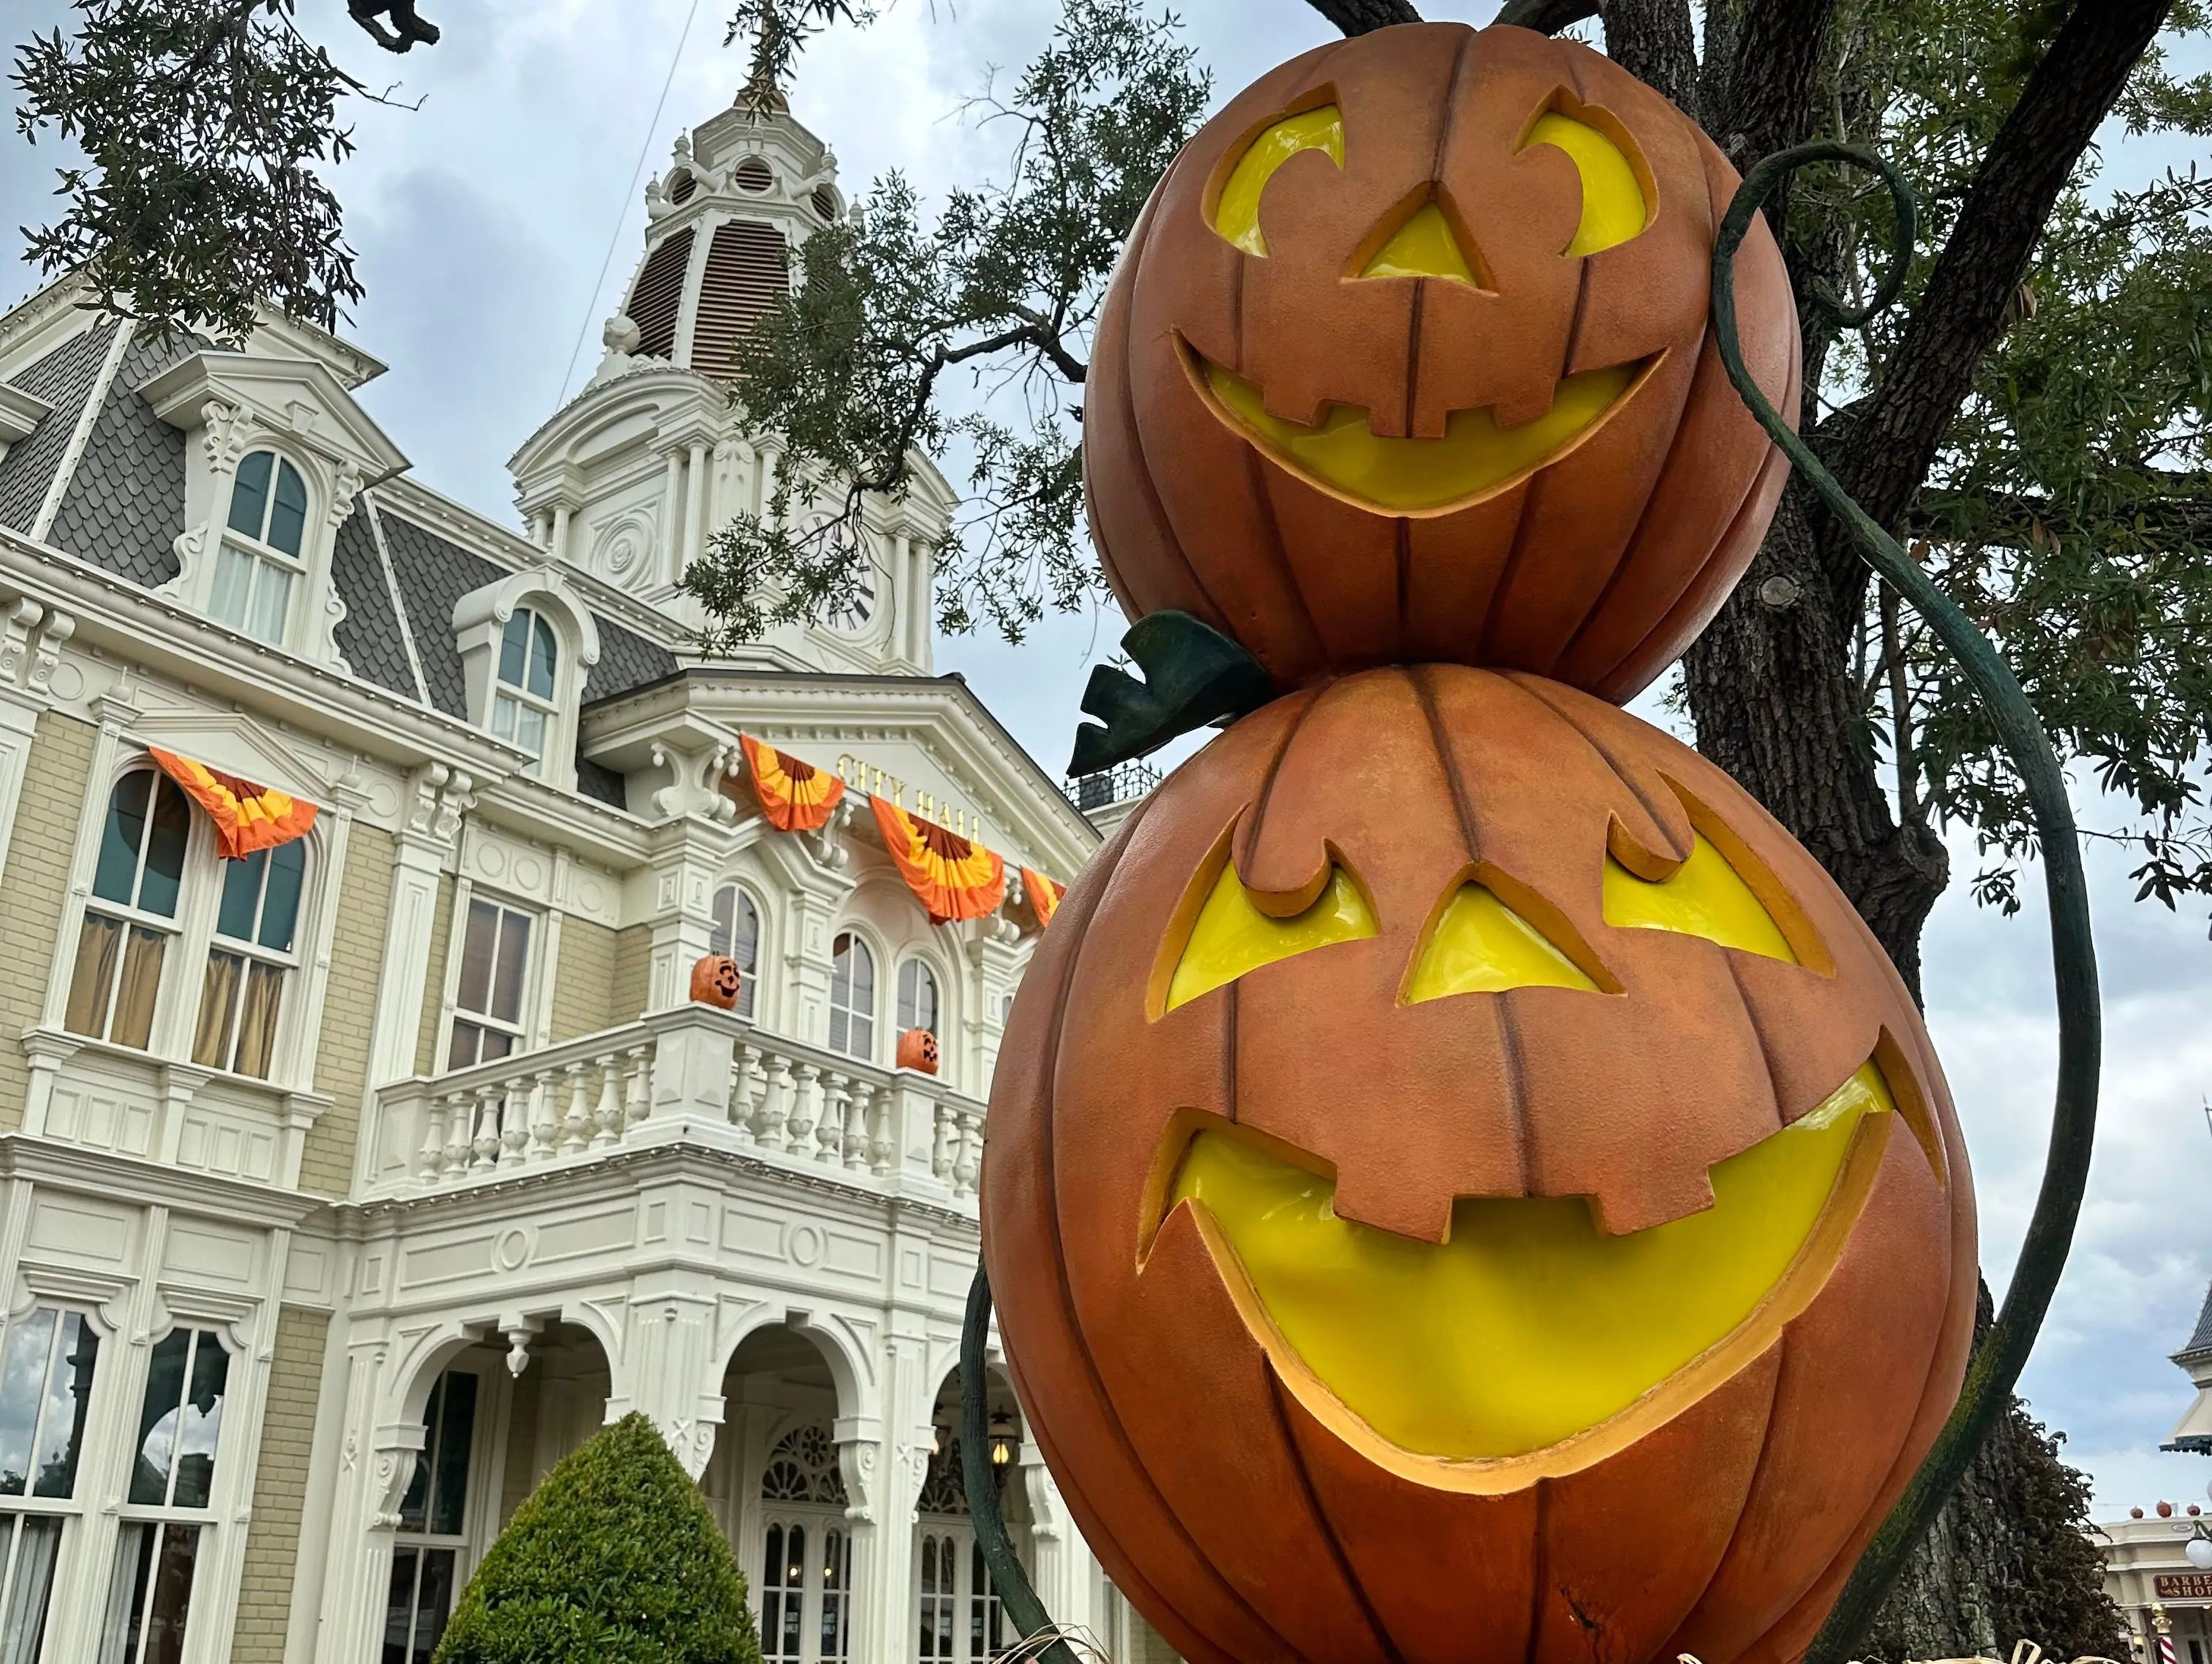 Pumpkins at Disney World.